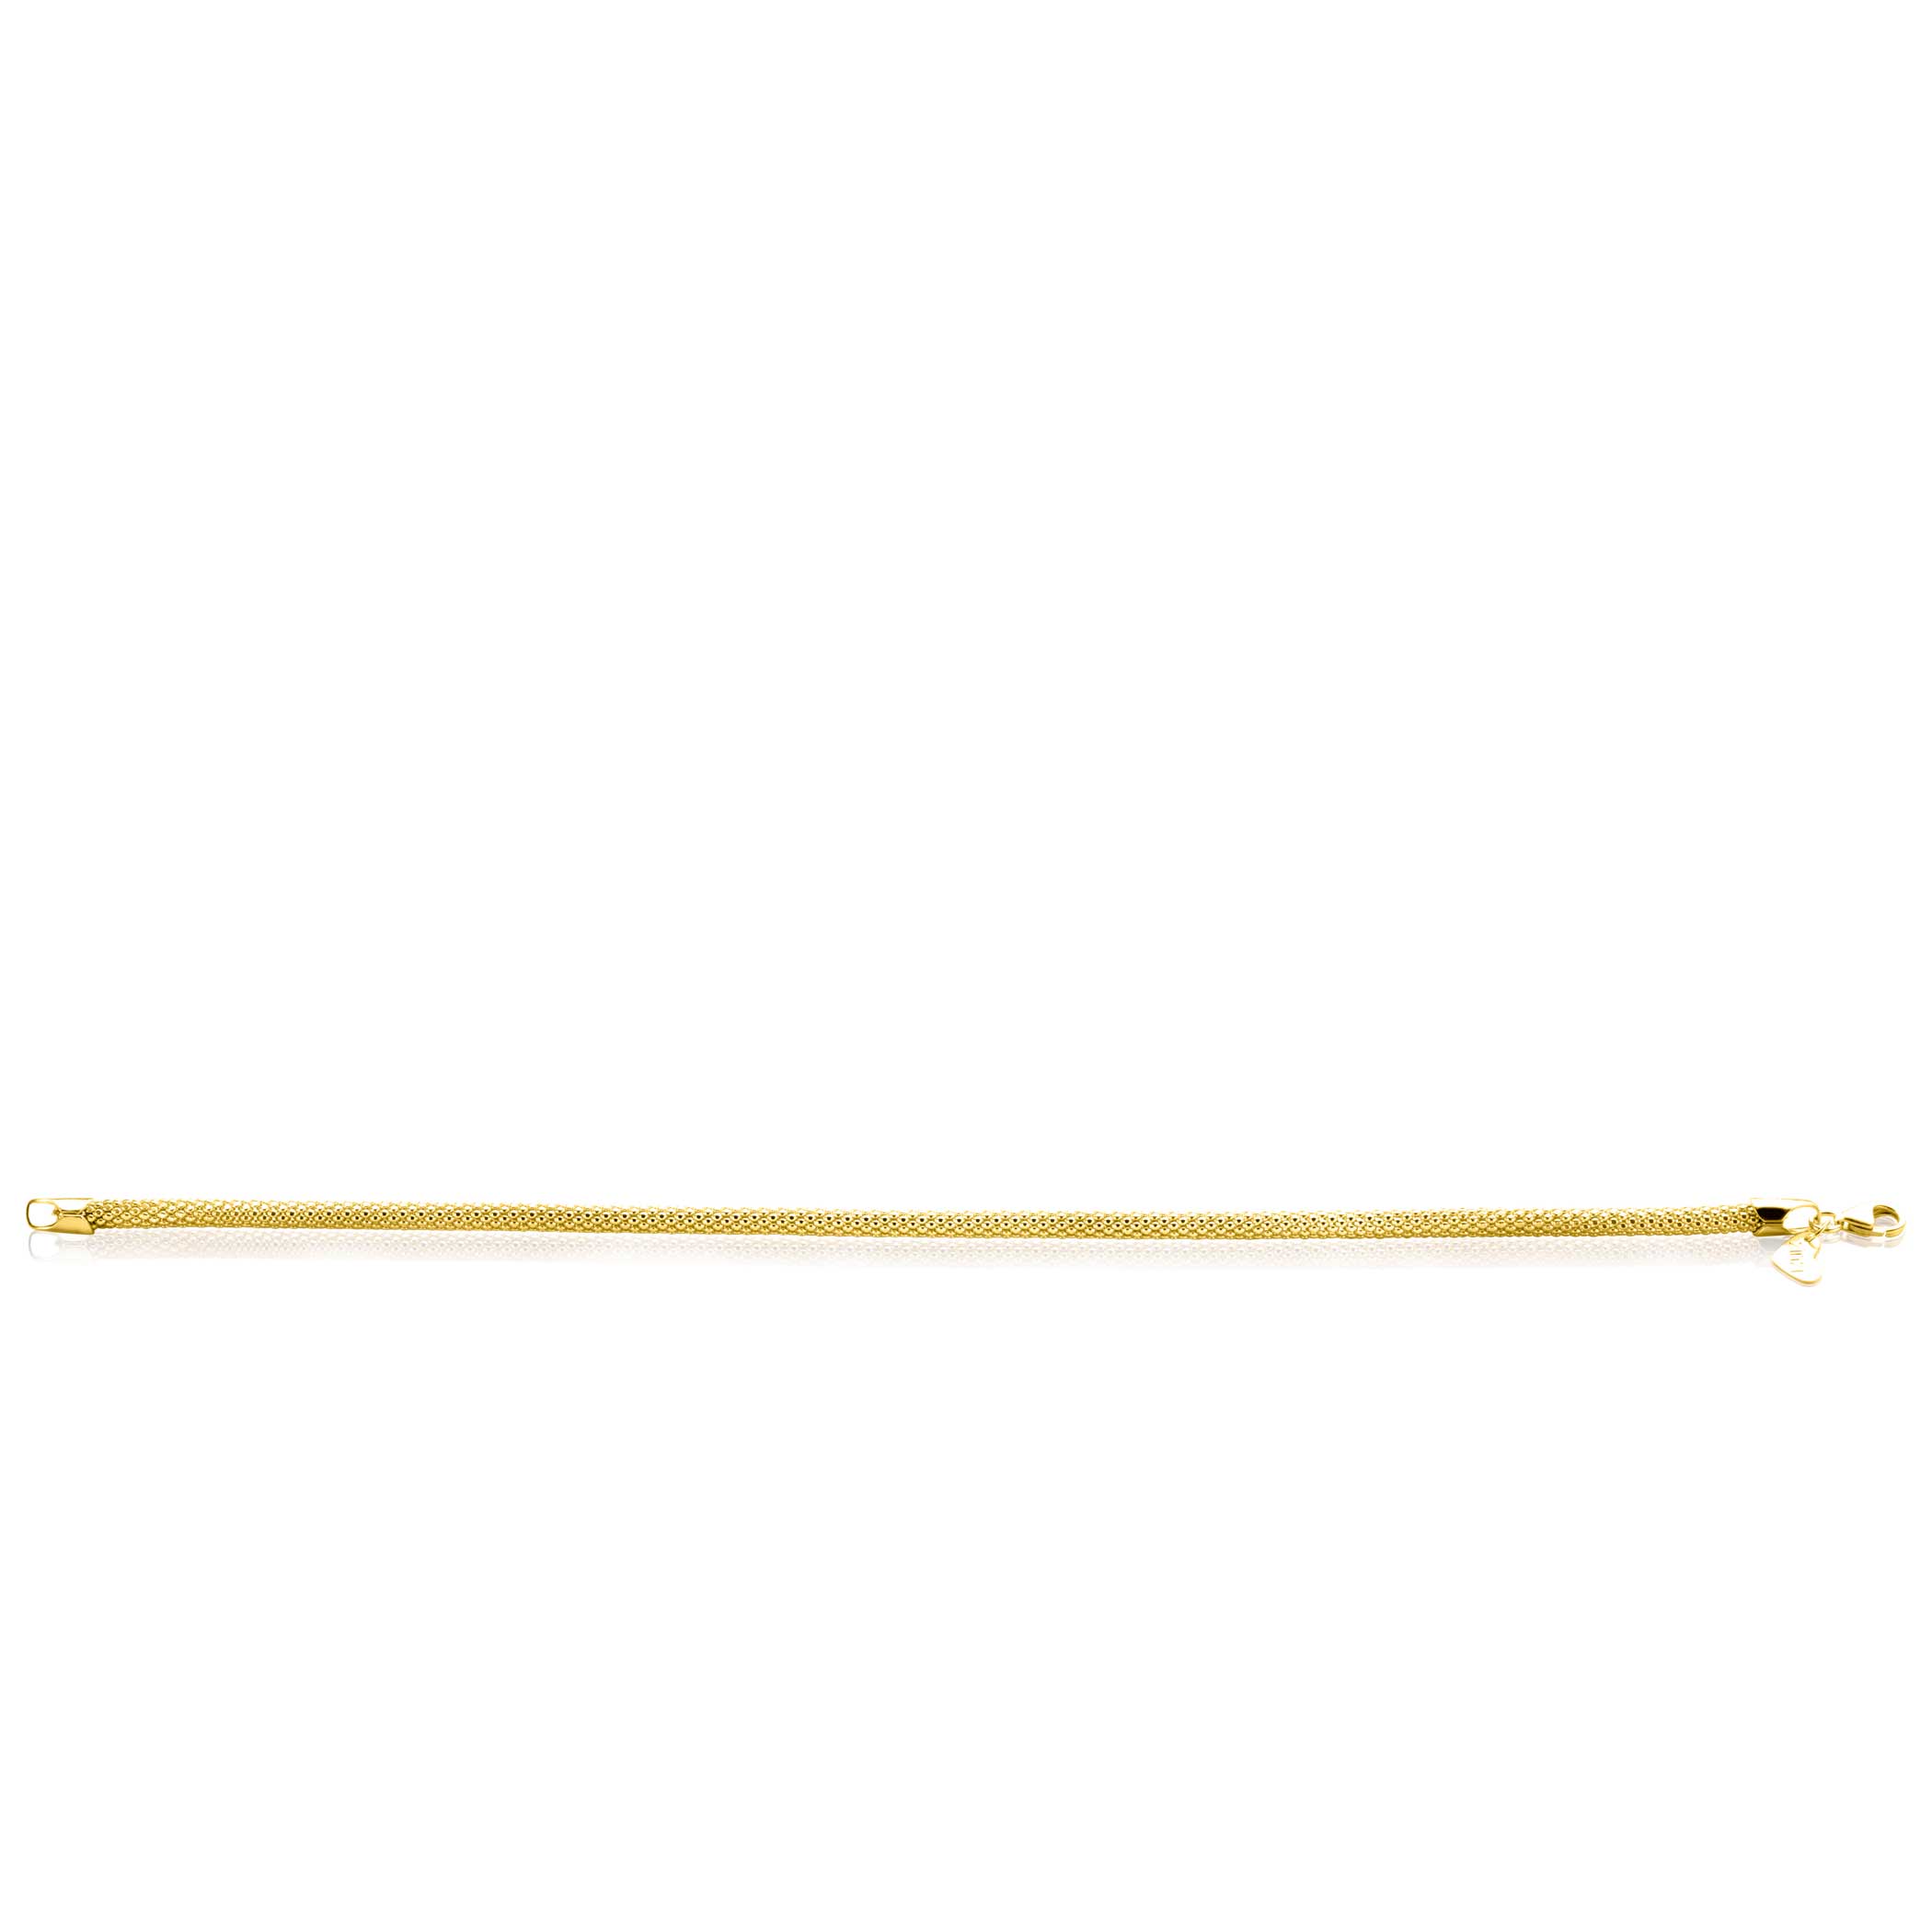 ZINZI Gold 14 krt gouden popcorn schakelarmband 3mm breed, lengte 18,5cm ZGA380